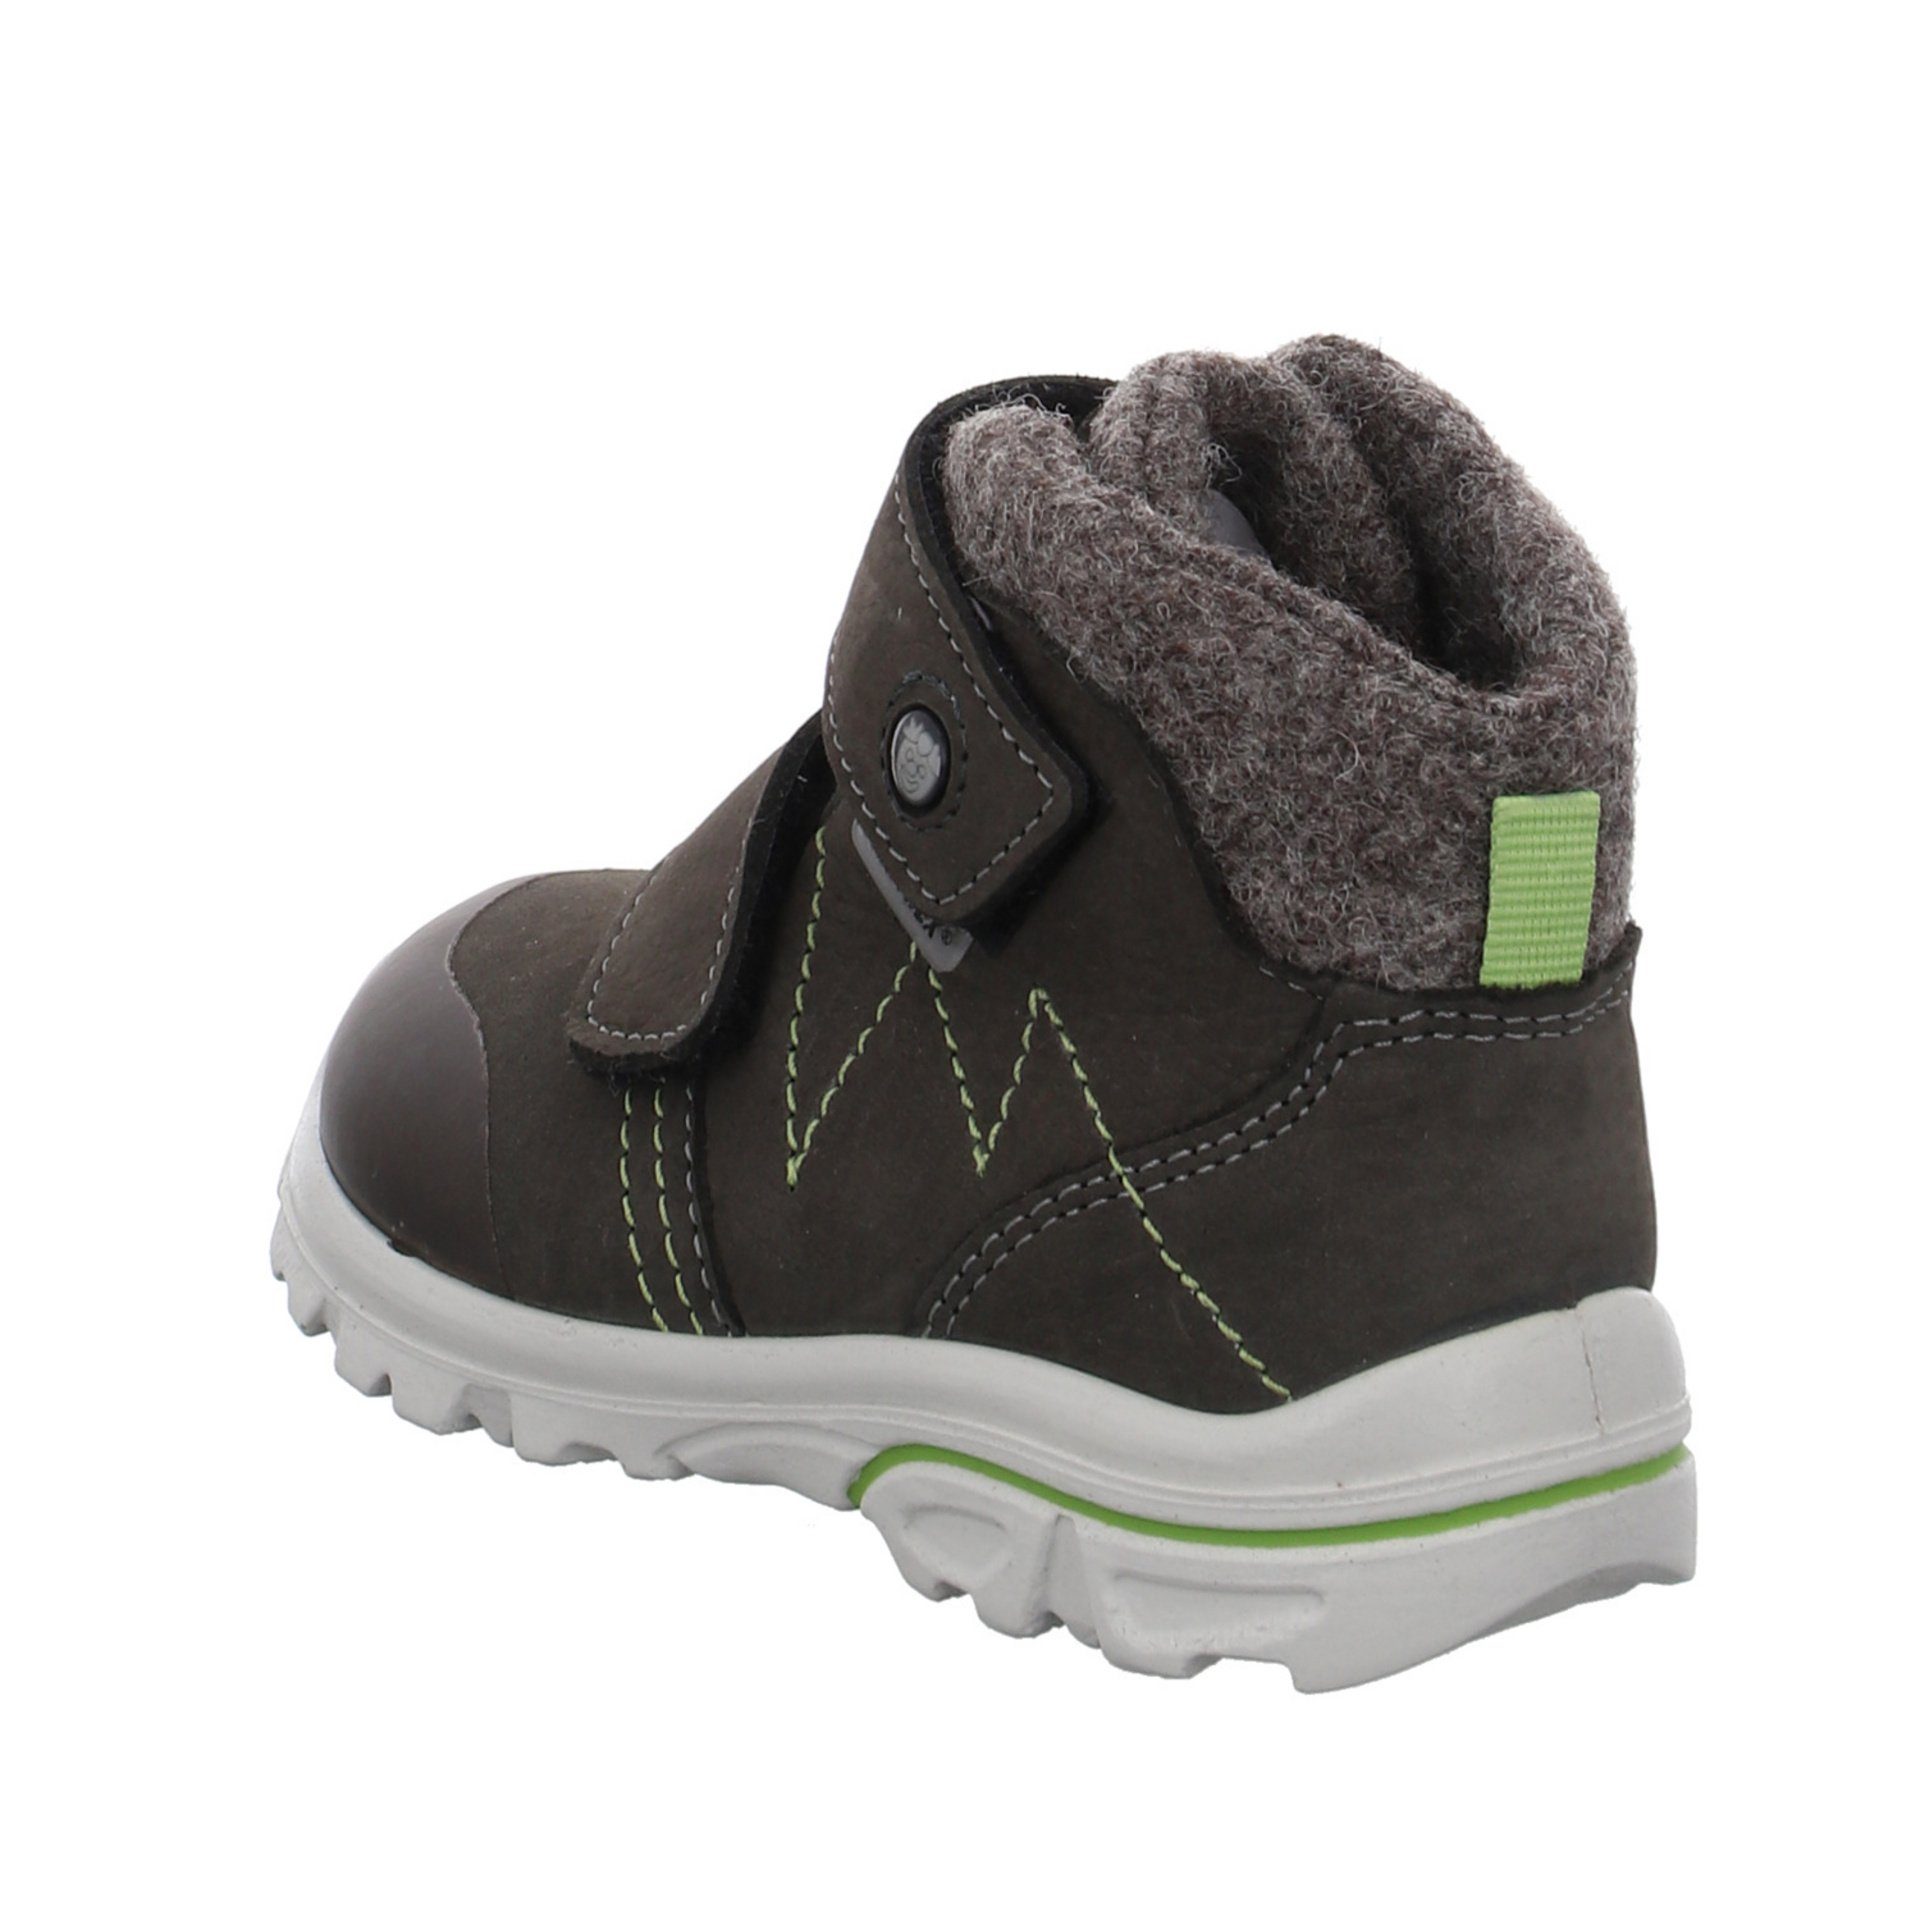 Baby Lauflernschuhe Leder-/Textilkombination Ricosta Boots Krabbelschuhe Dario Pepino Lauflernschuh timo